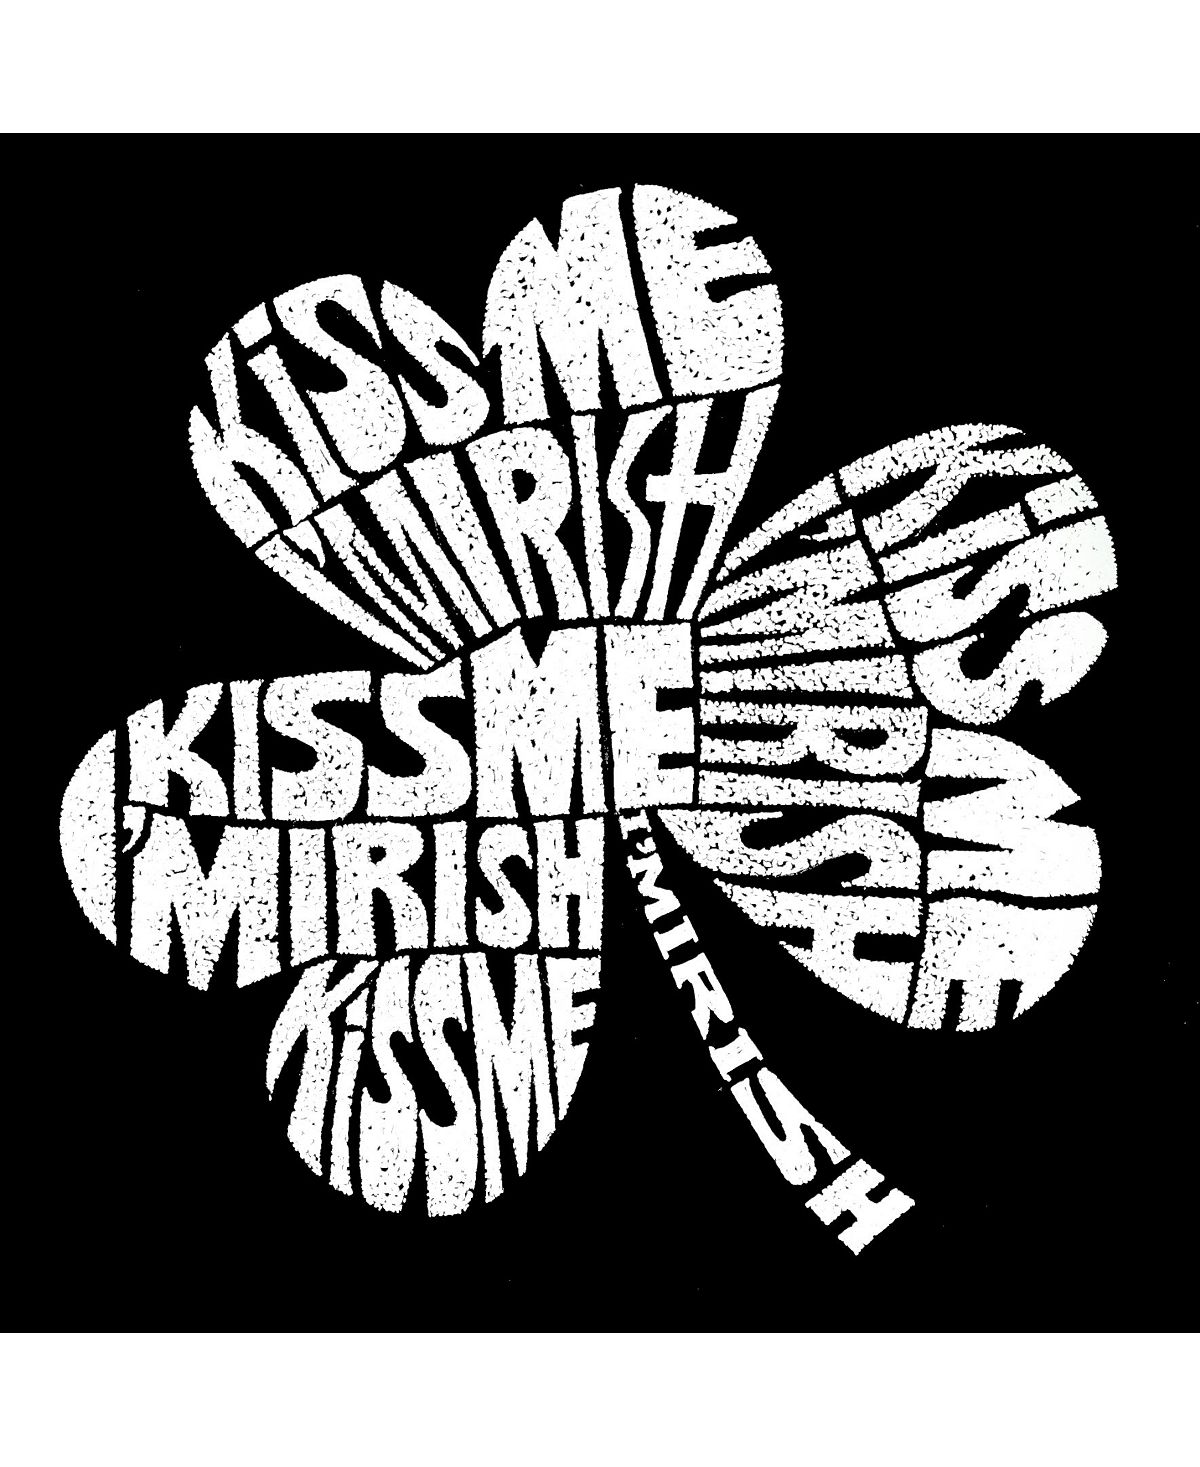 цена Мужская футболка с надписью word art - kiss me i'm irish LA Pop Art, черный